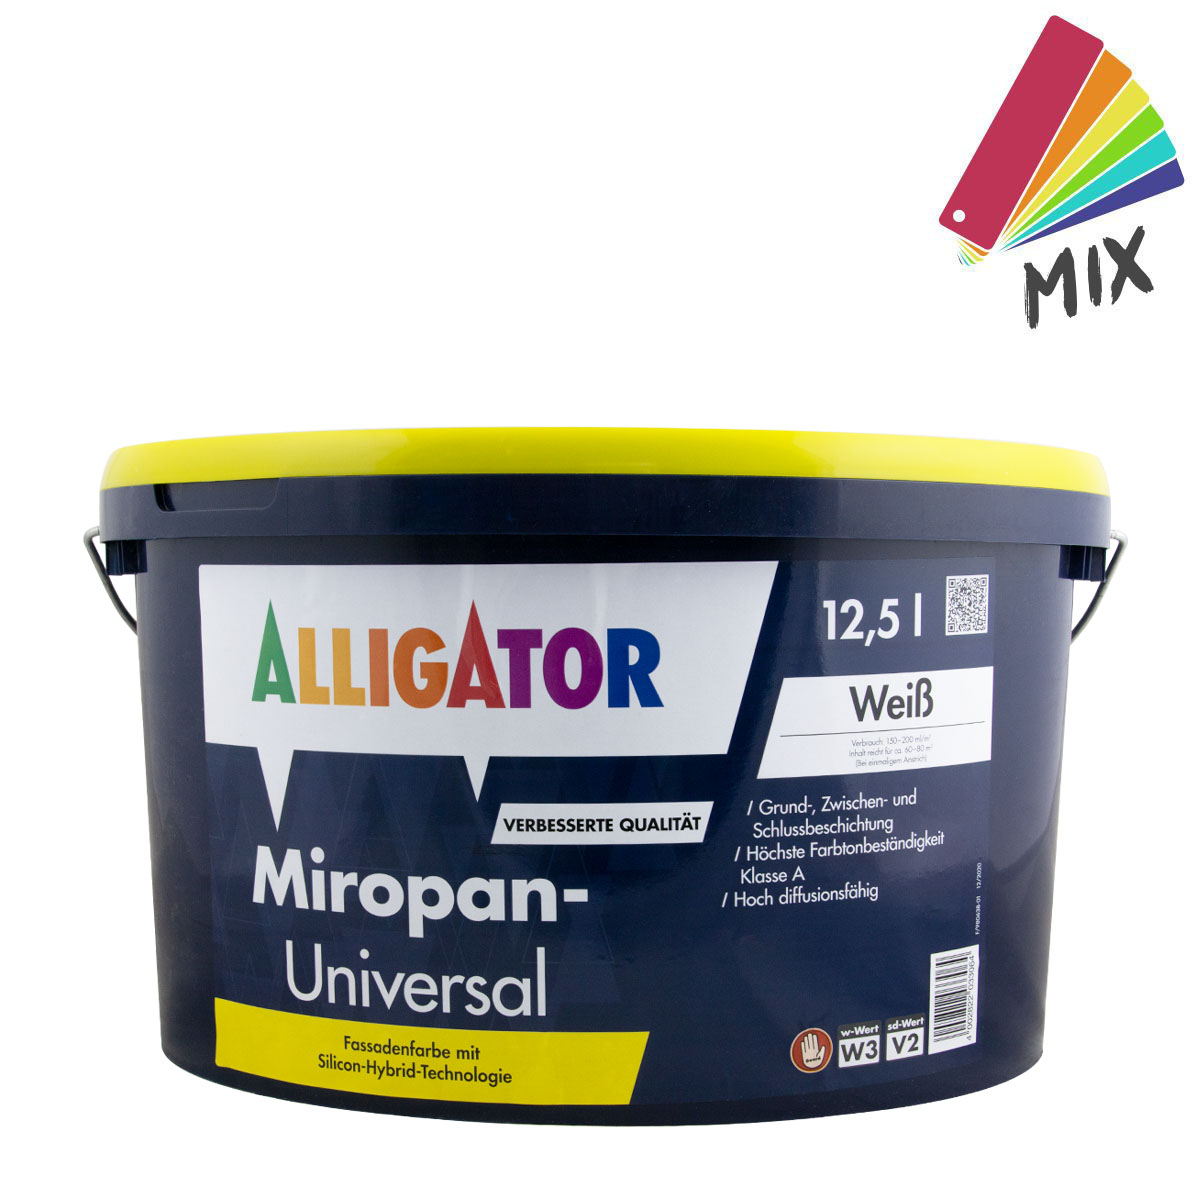 Alligator Miropan-Universal 12,5L MIX PG A, Siliconharz-Fassadenfarbe